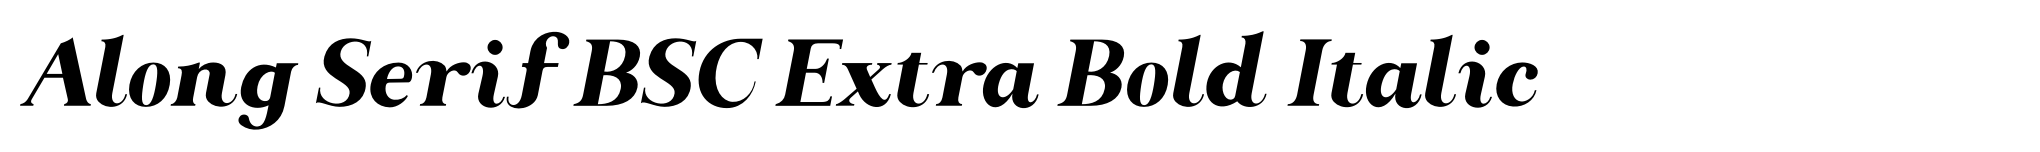 Along Serif BSC Extra Bold Italic image